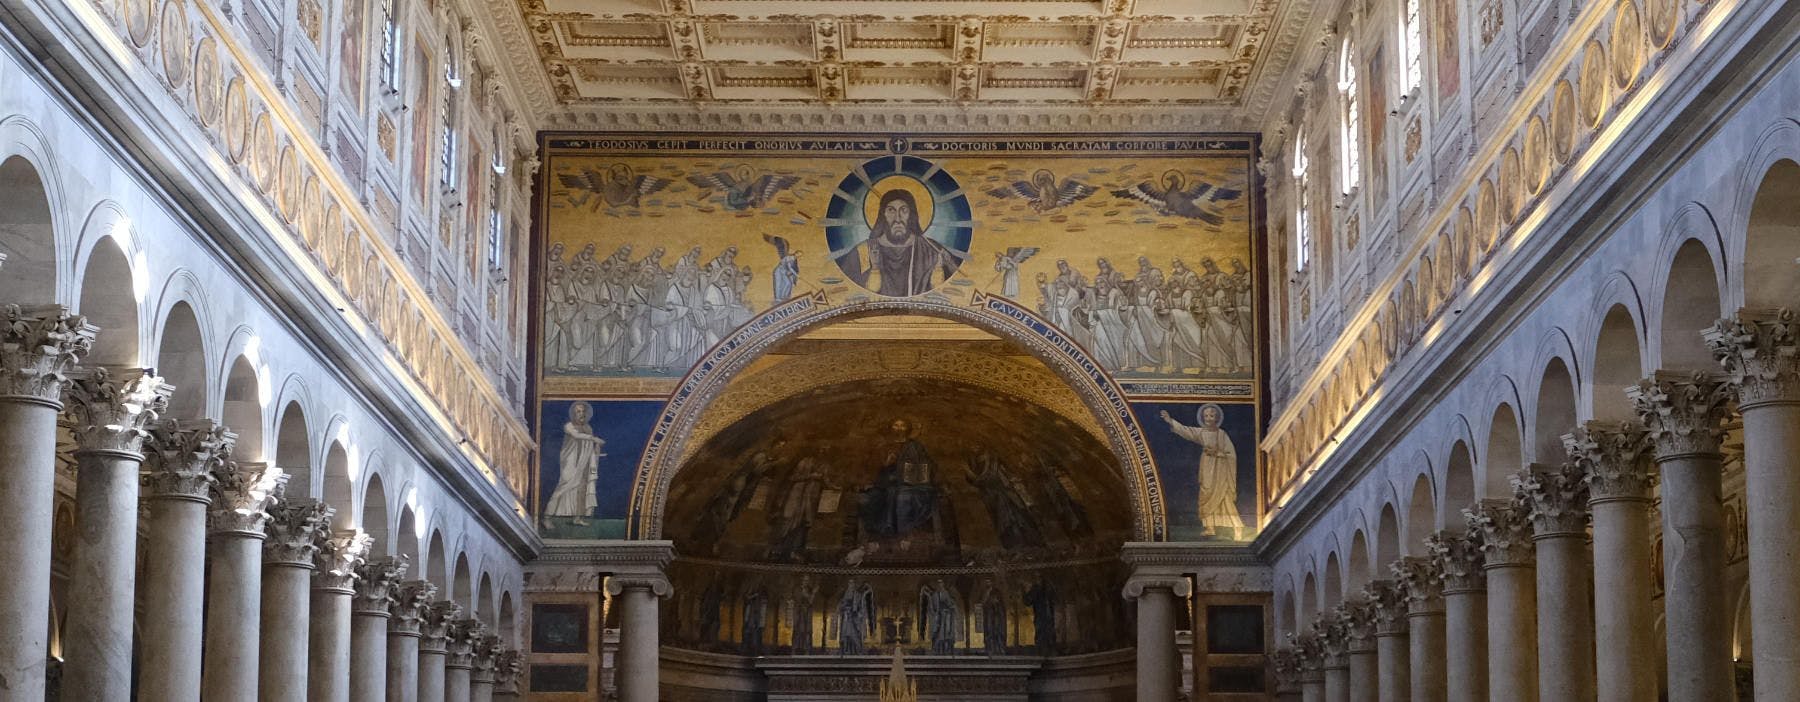 rome saint paul outside the walls mosaic triumphal arch doctor mundi revelation elders